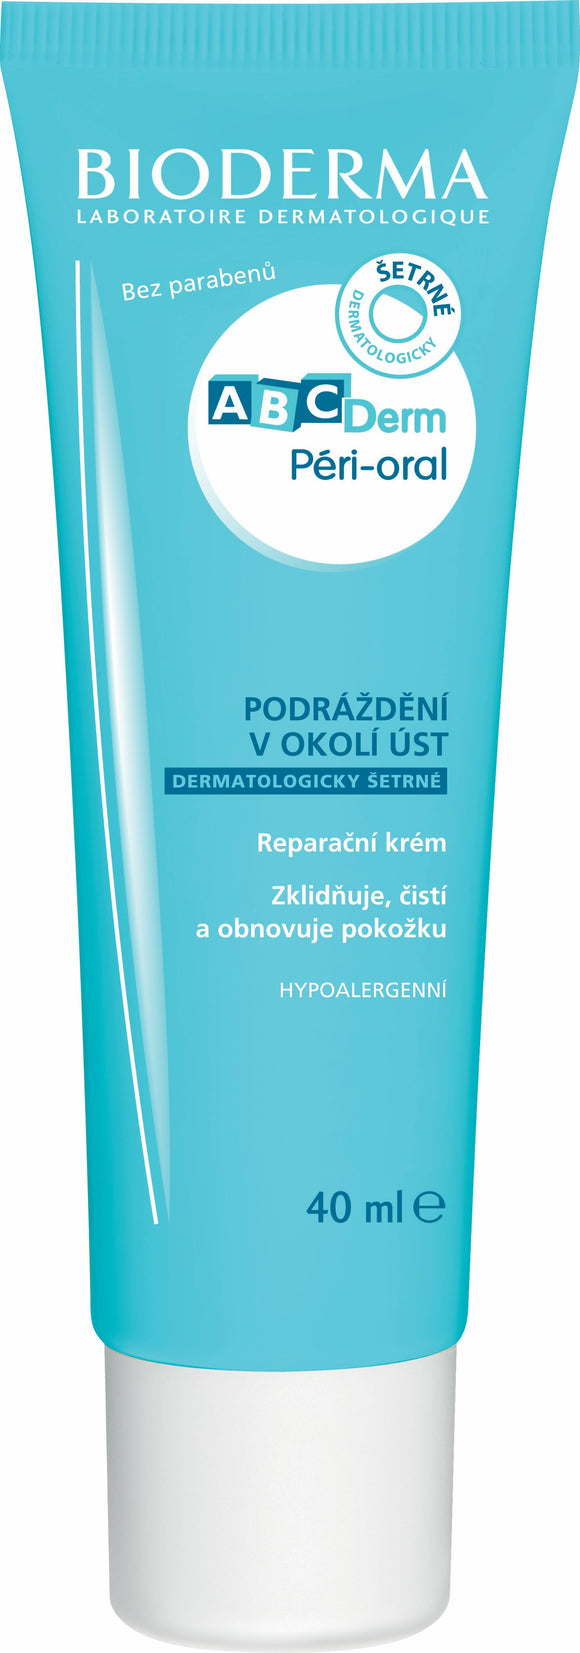 Bioderma Abcderm Peri-oral Cream 40 ml - mydrxm.com